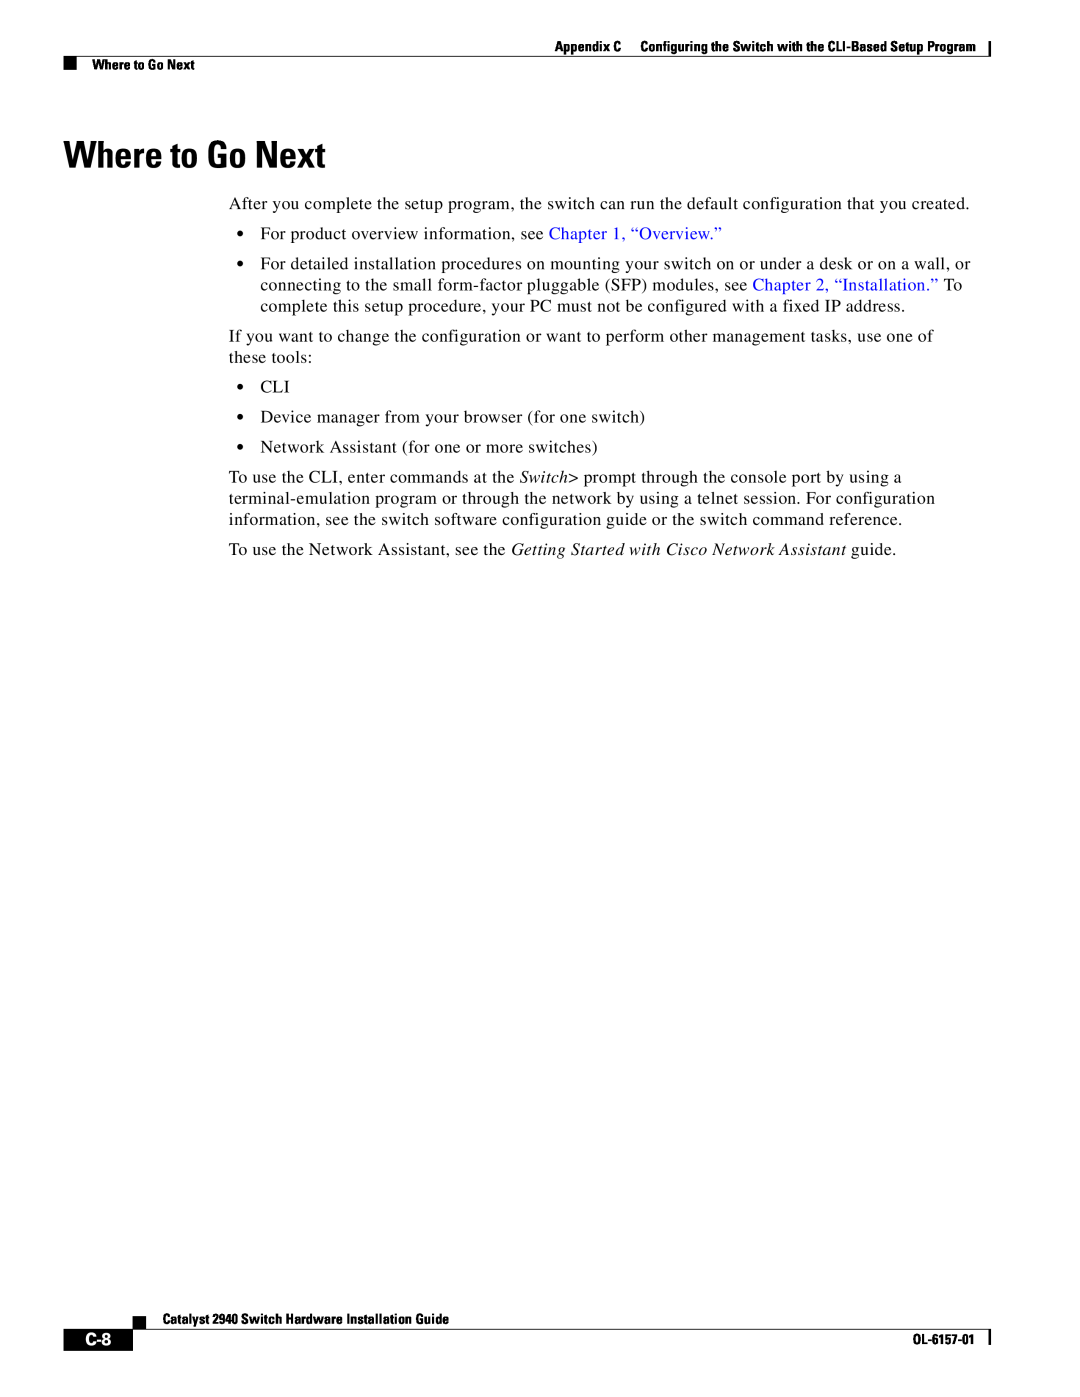 Cisco Systems OL-6157-01 manual Where to Go Next 